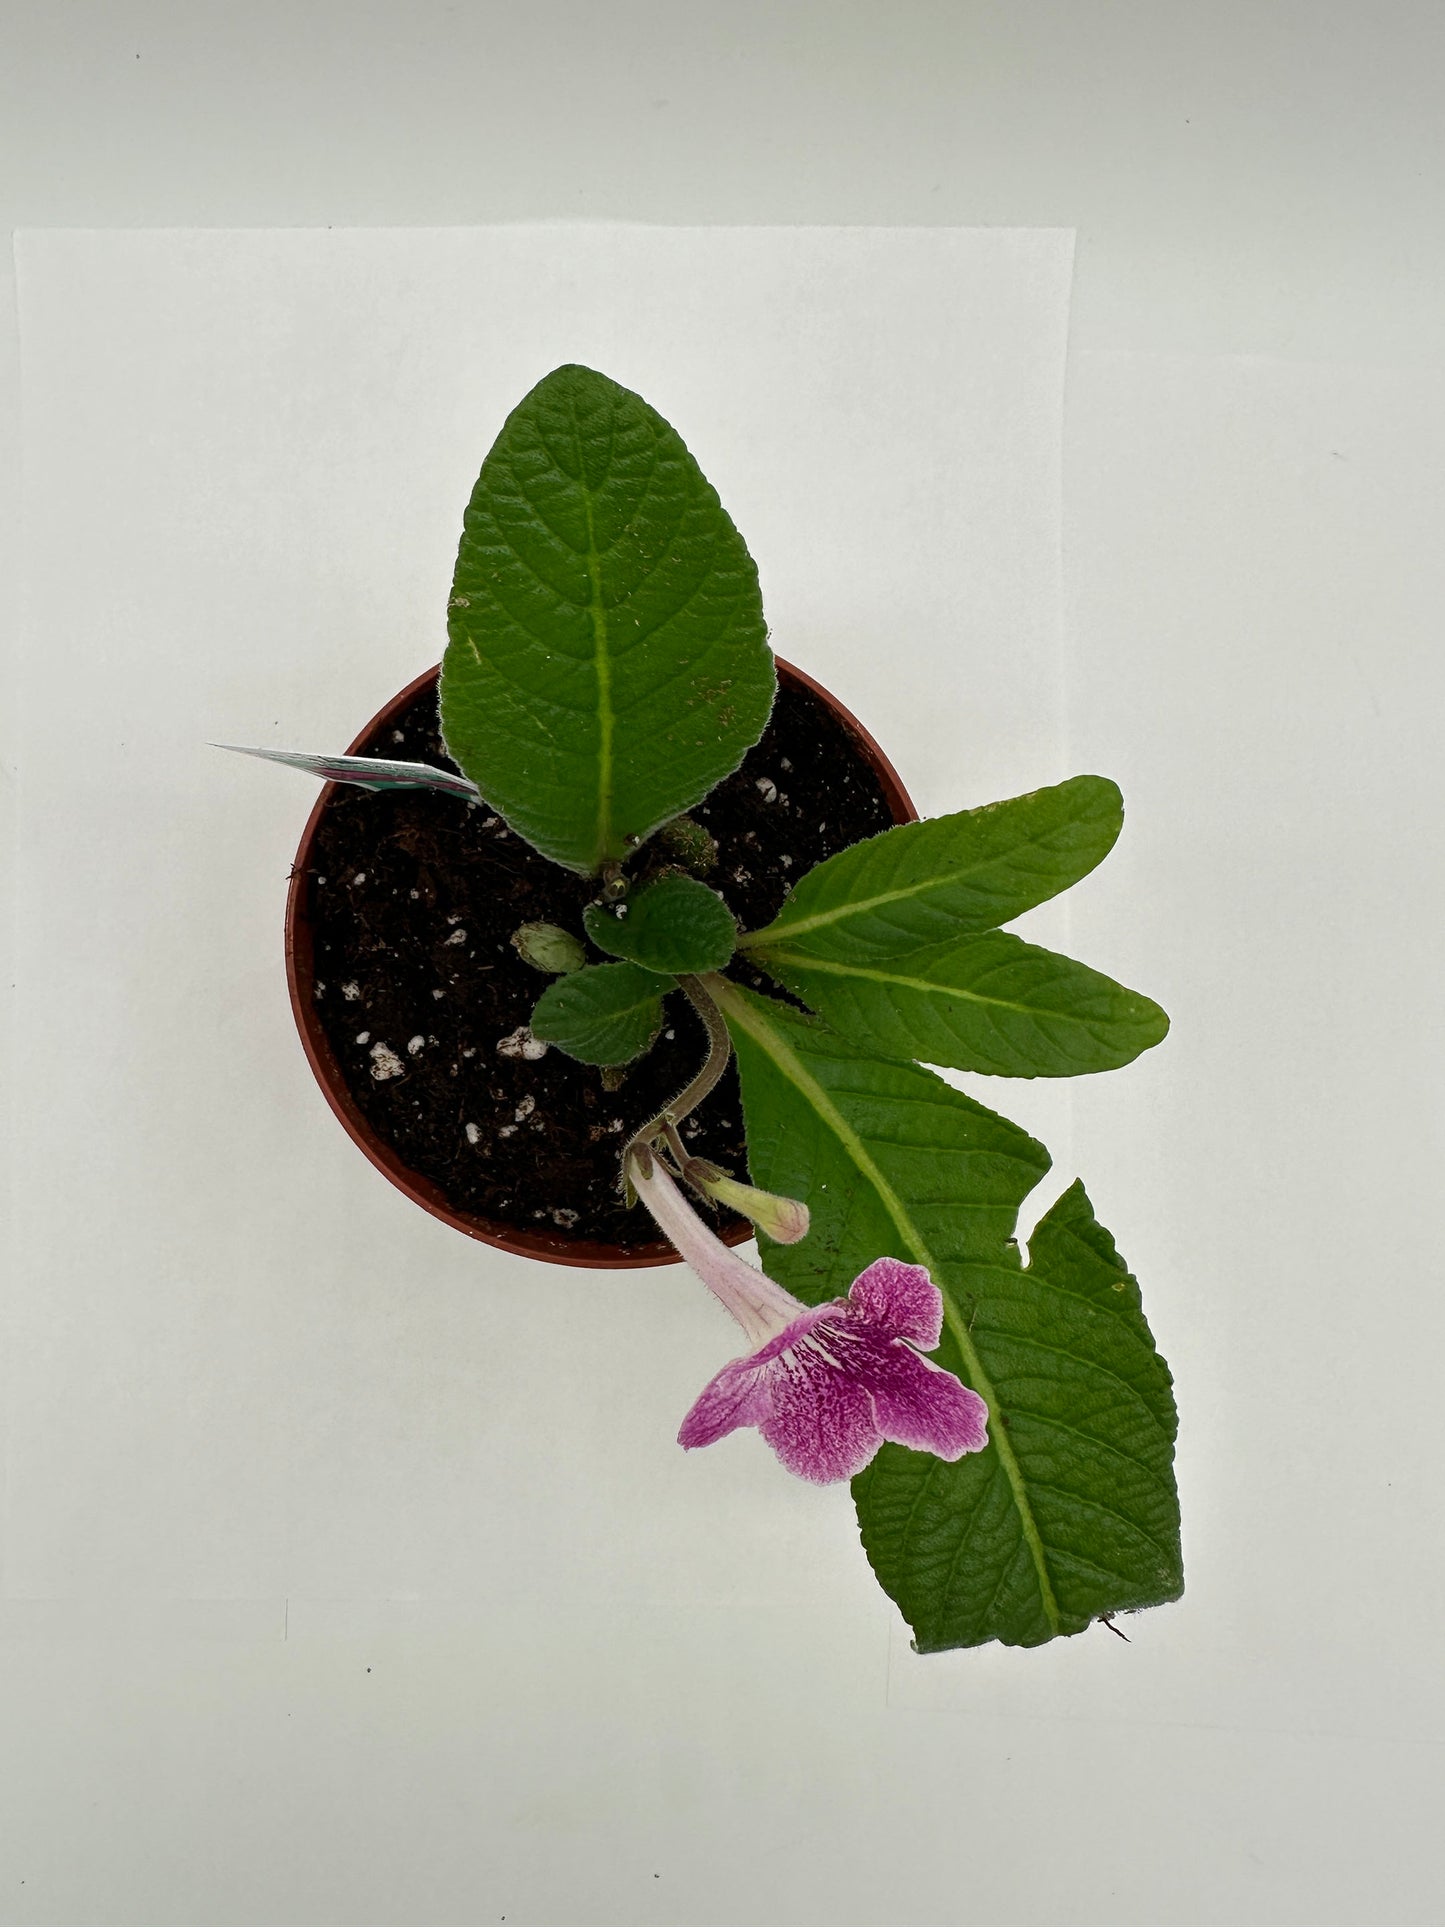 Strawberry Ice Streptocarpus Ladyslipper (Cape Primrose) Live Plant in 4" nursery pot